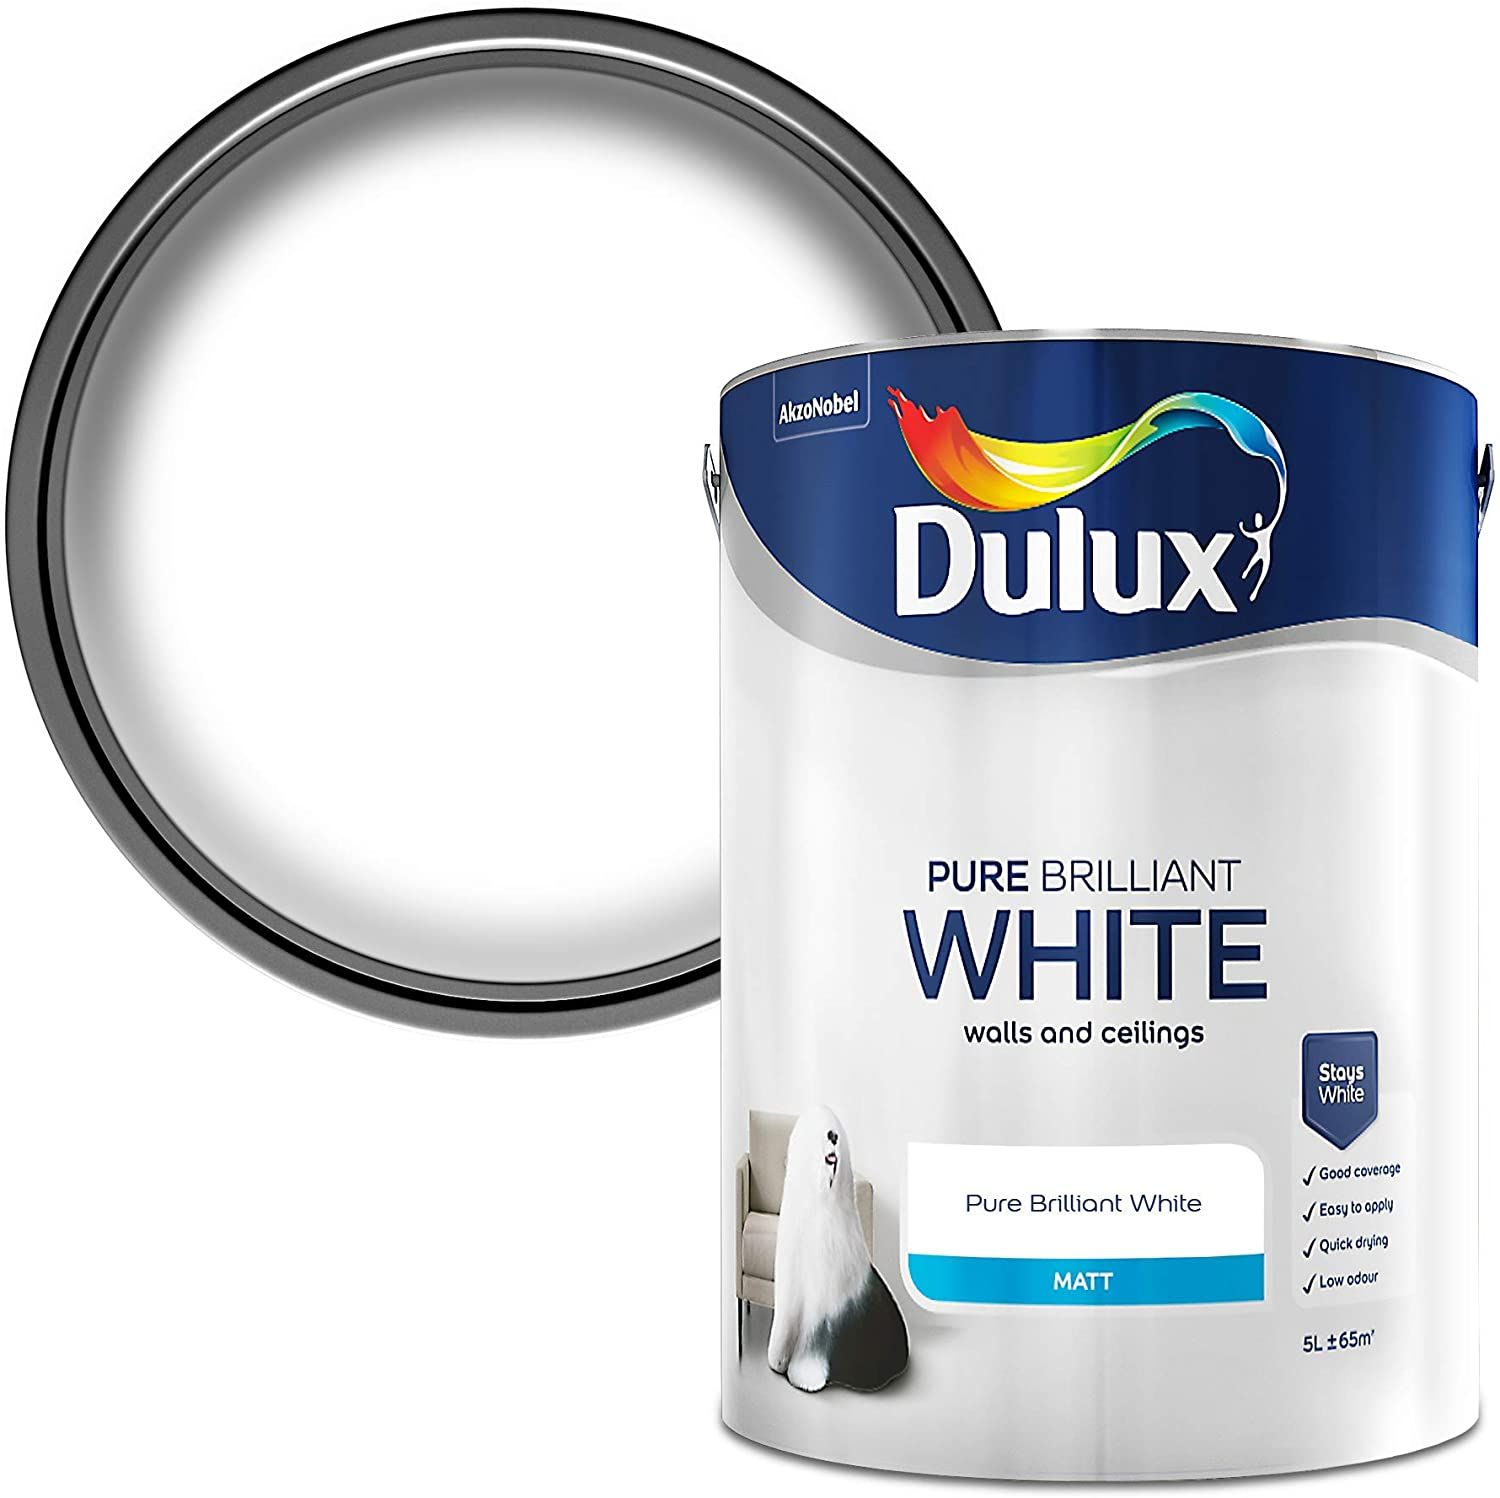 Emulsió blanca brillant Dulux